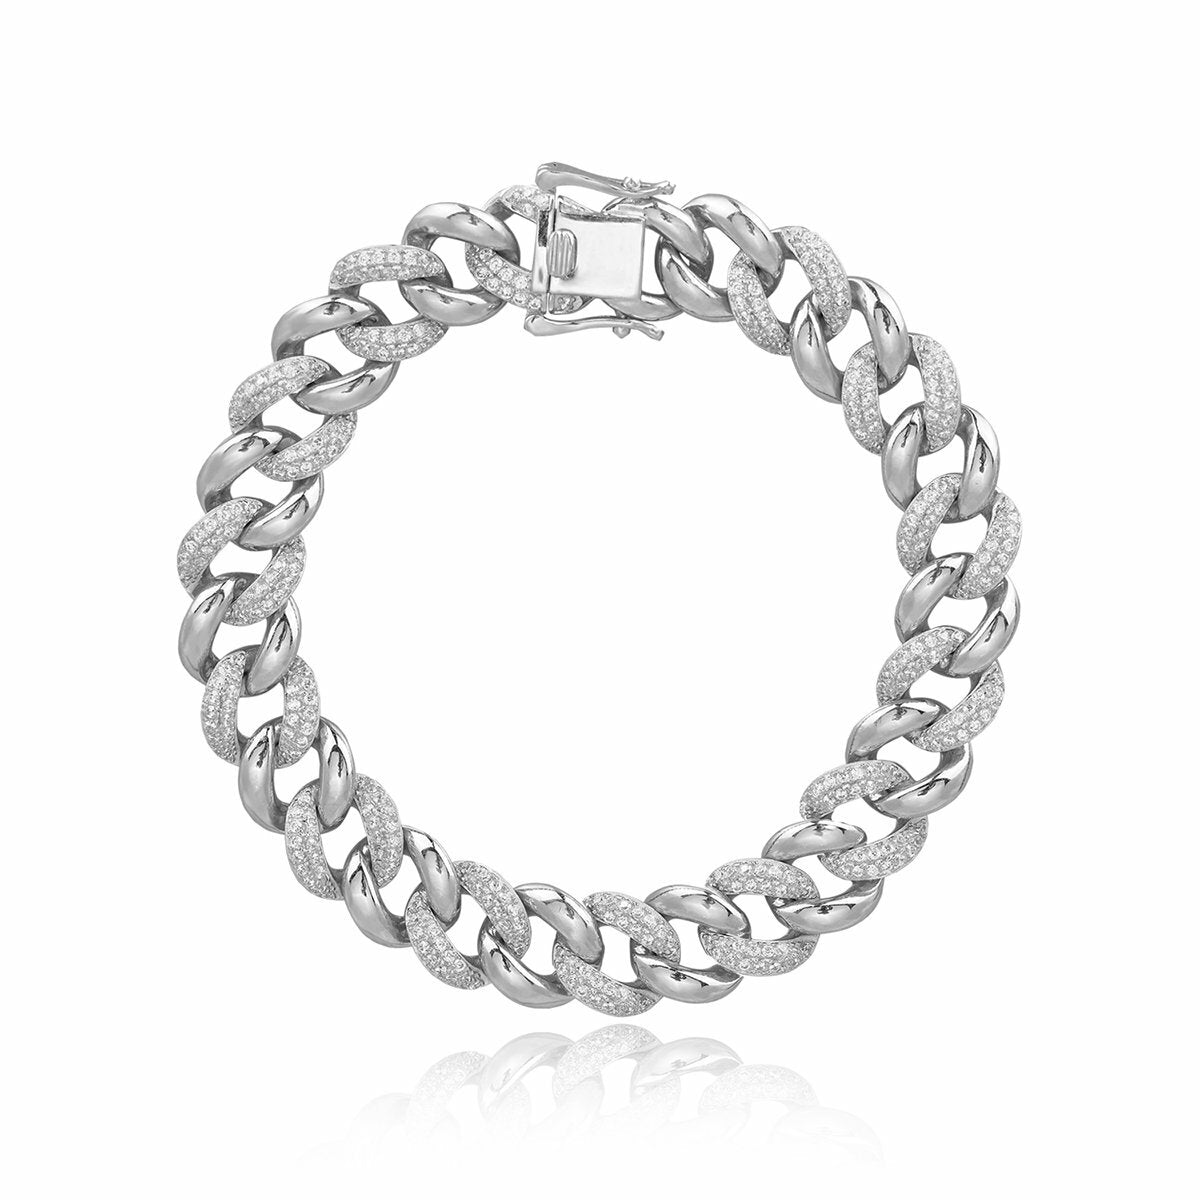 Groumette Bracelet in Silver Mabina Gioielli
 533380S